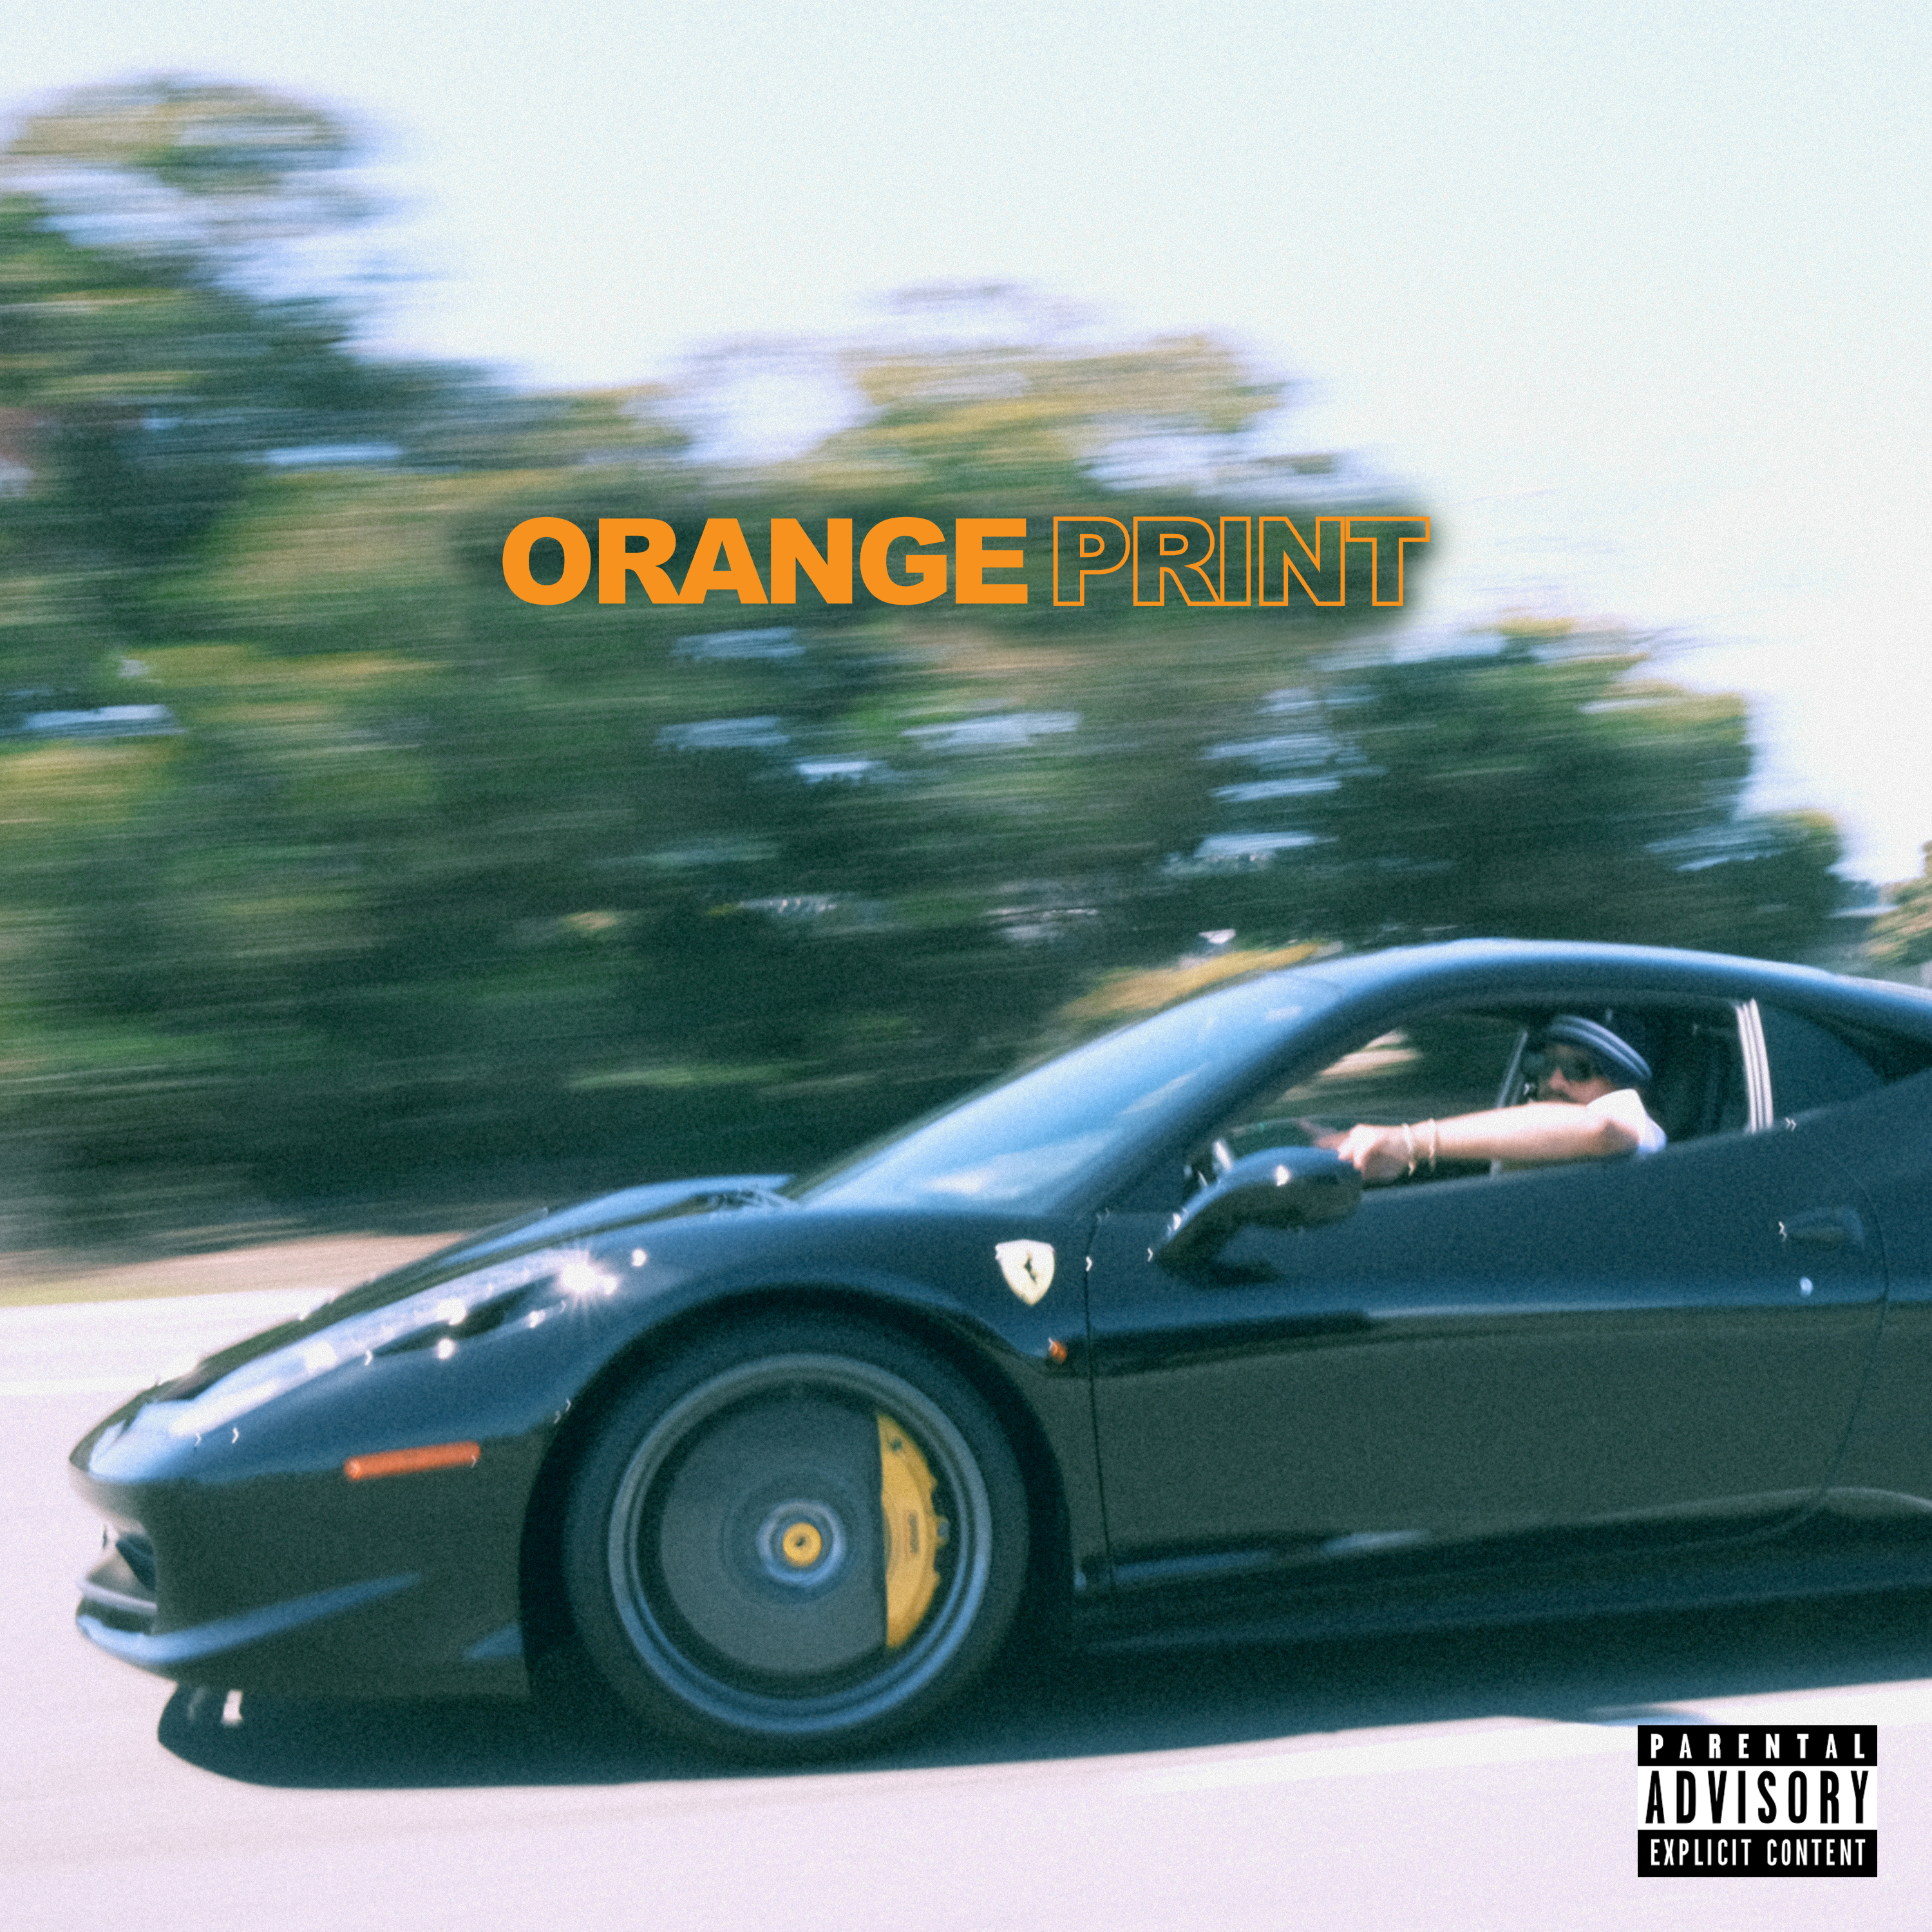 Larry June Releases New Album “Orange Print” Featuring DeJ Loaf, Money Man, & More